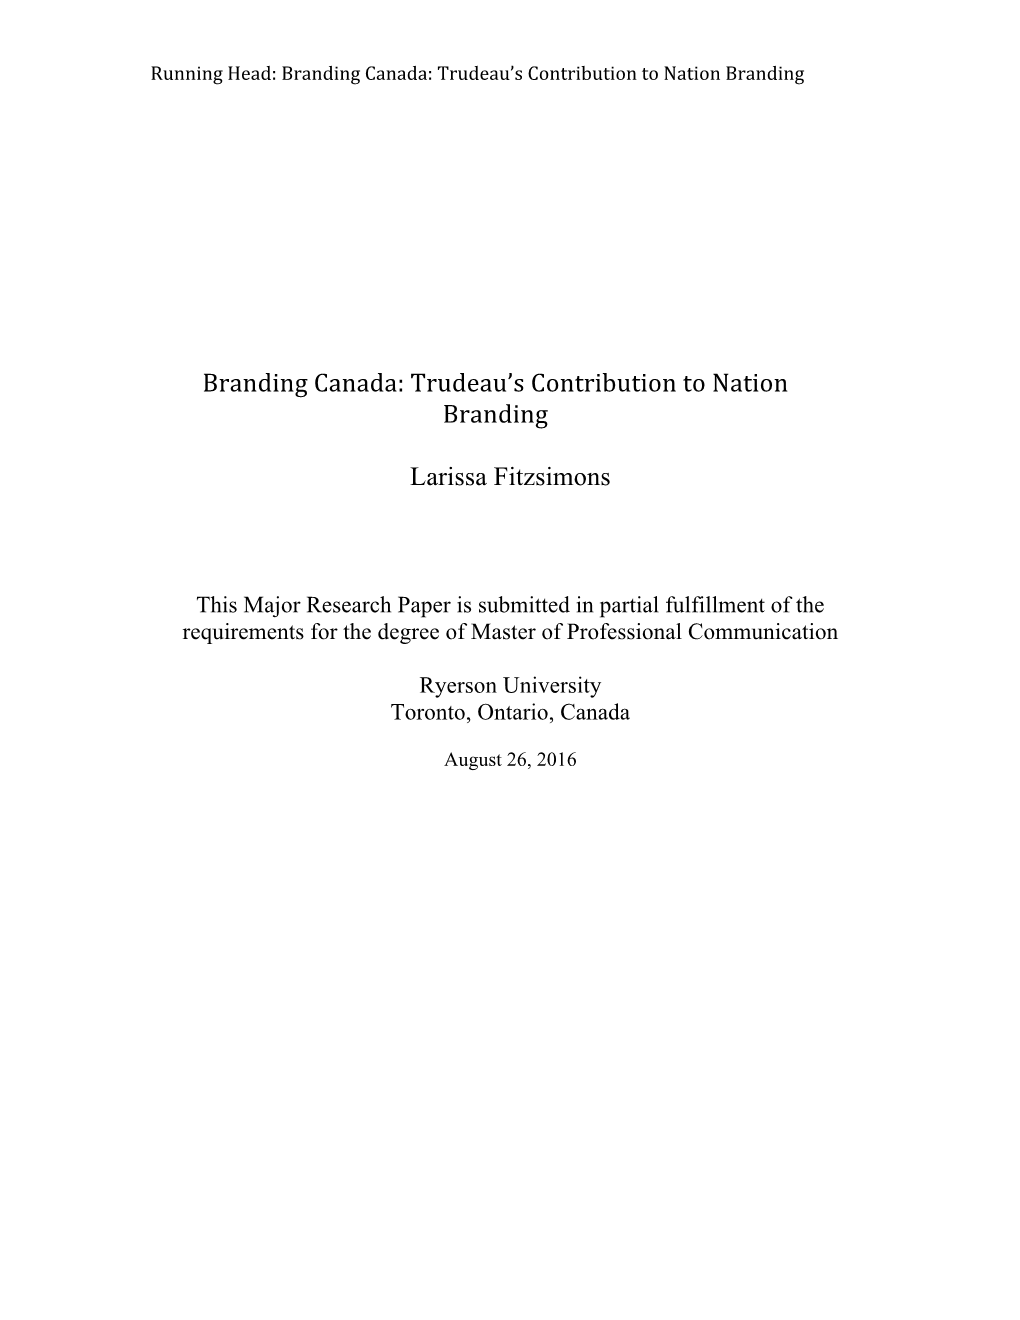 Branding Canada: Trudeau's Contribution to Nation Branding